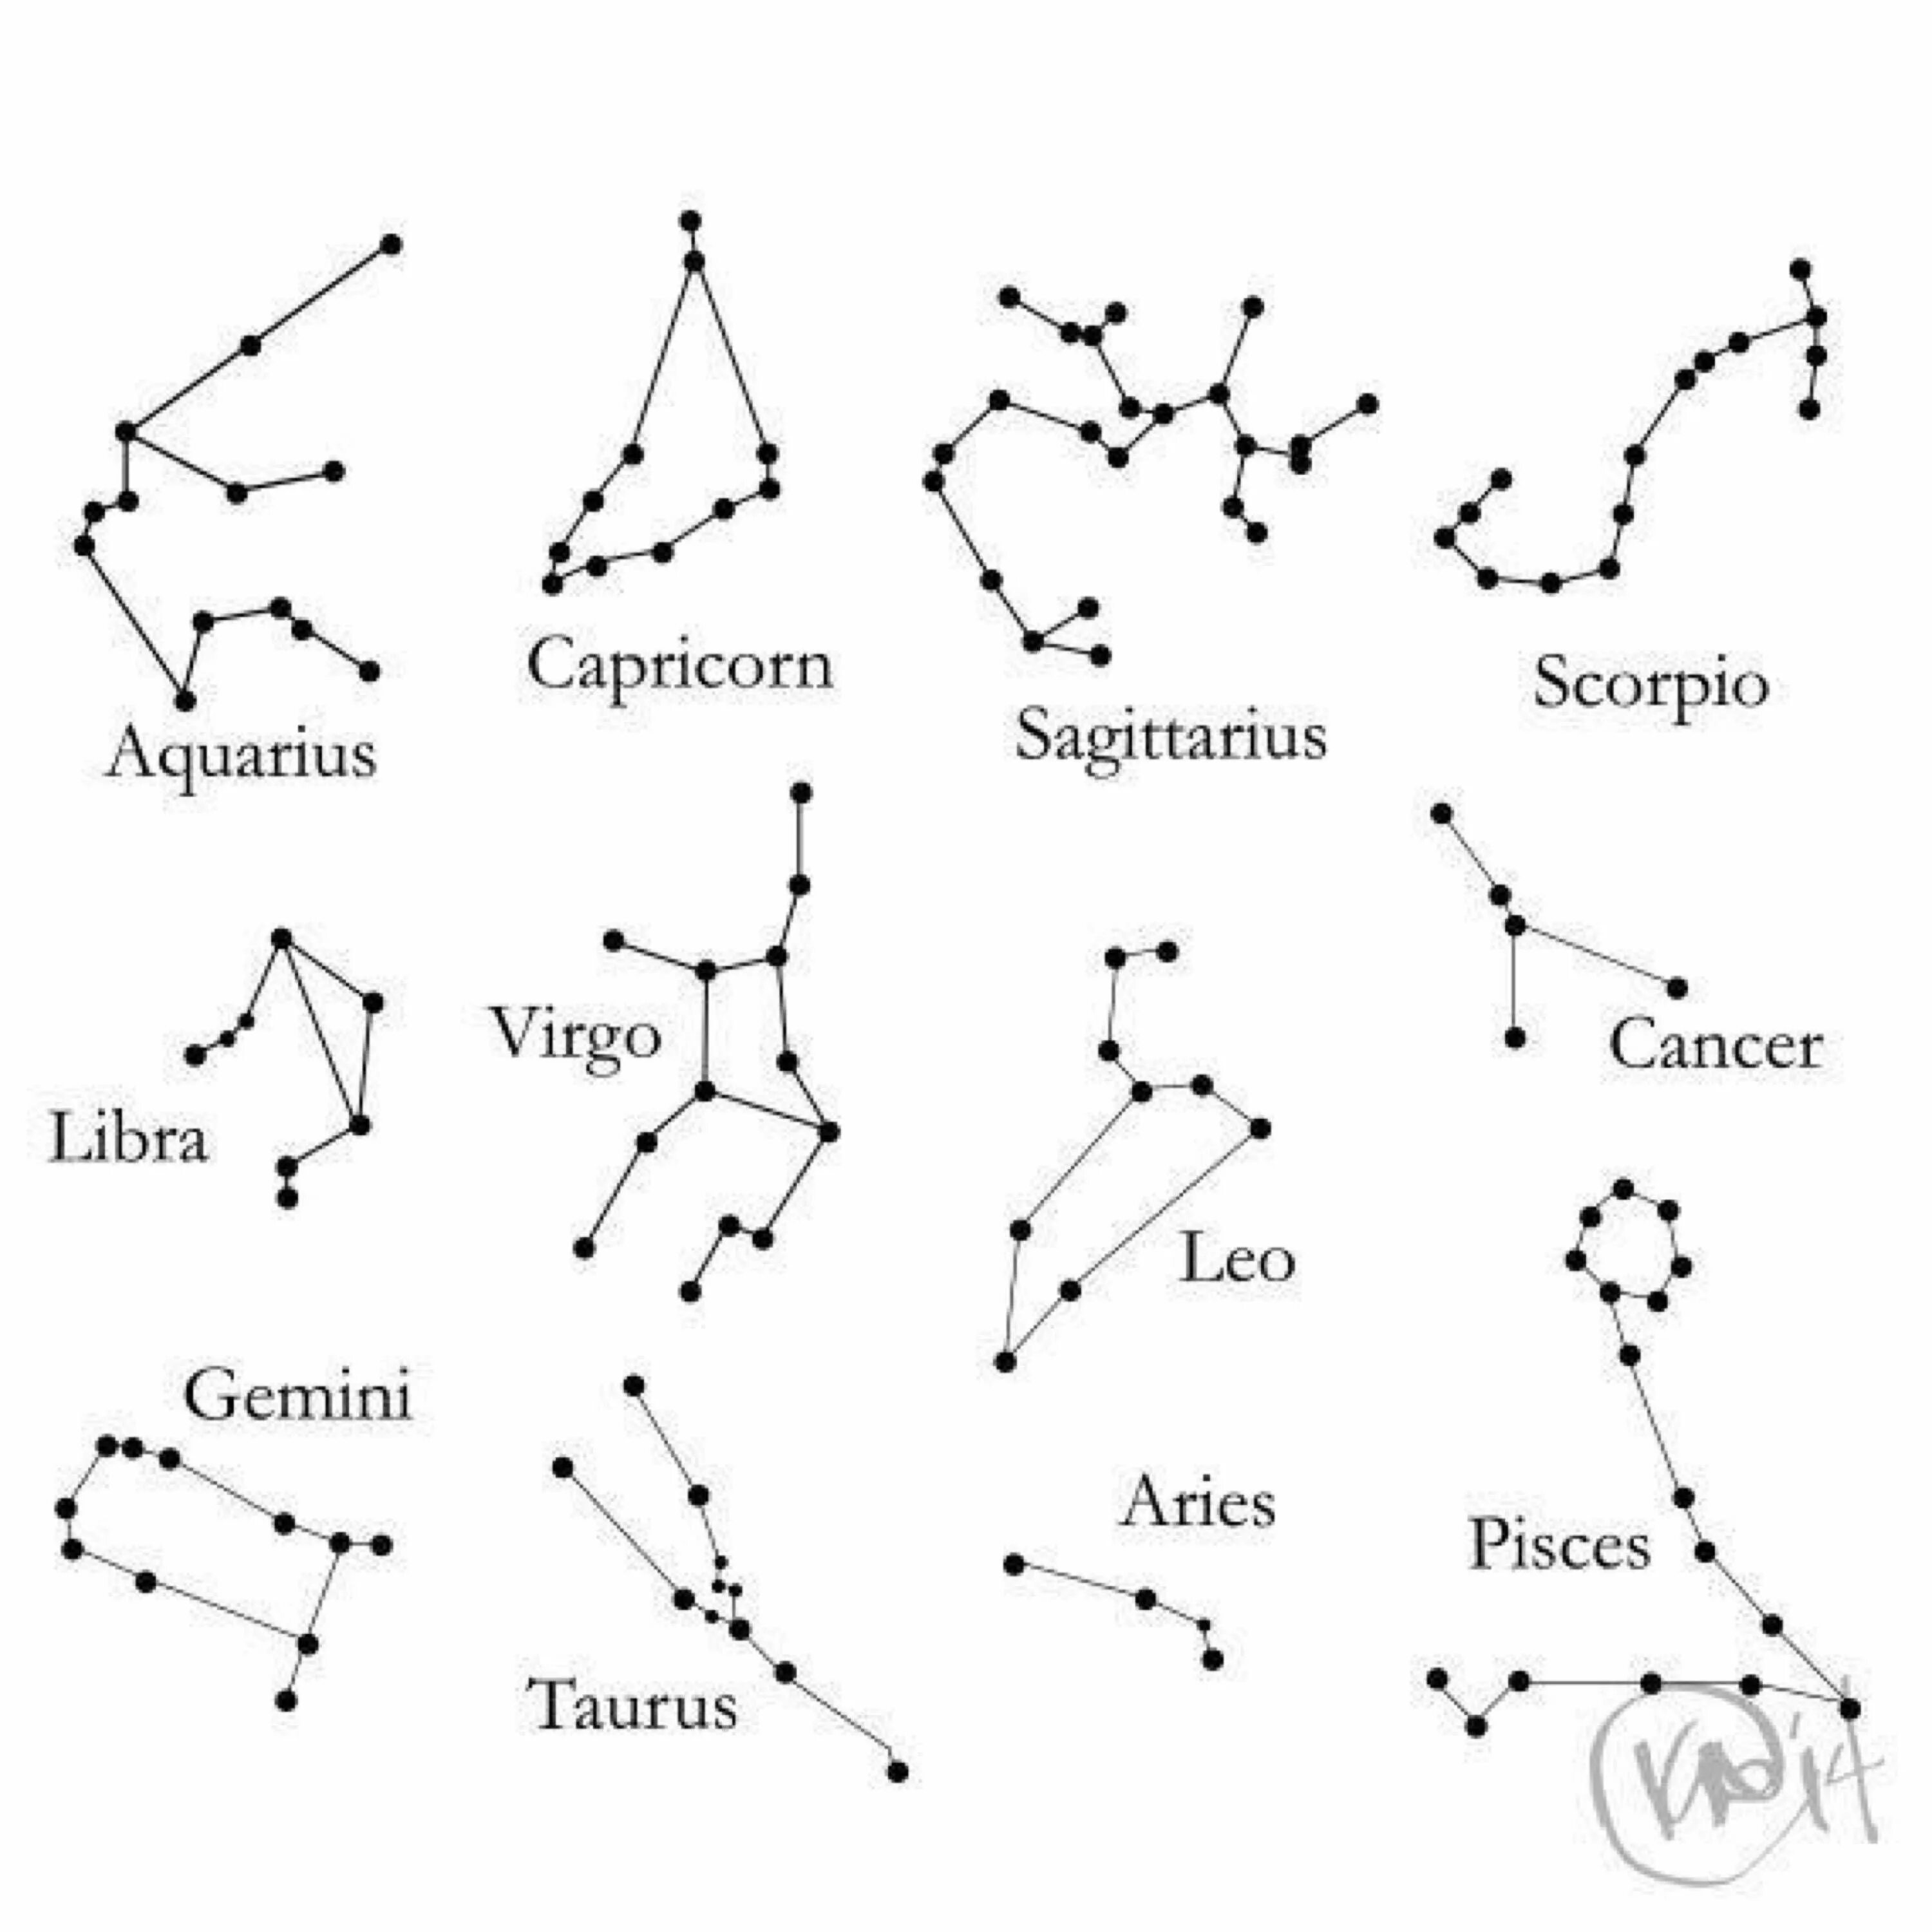 Спортивные созвездия. Ариес знак зодиака схема созвездия. Созвездие Стрелец схема по точкам. Созвездие Овен схема по точкам. Дева Созвездие схема.